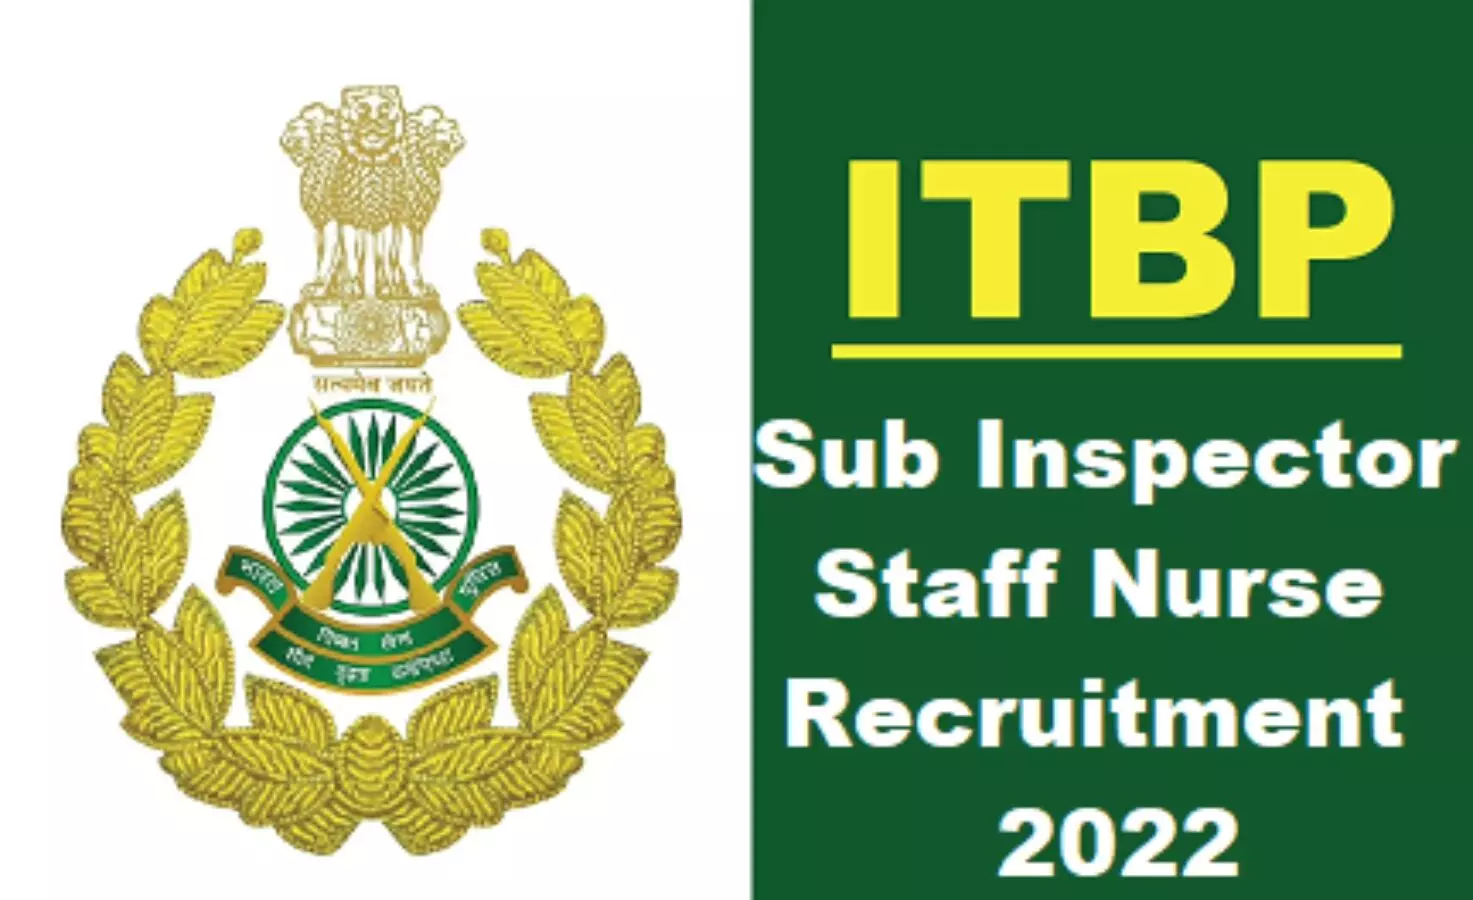 itbp staff nurse recruitment 2022 know selection process education qualification vacancy detail